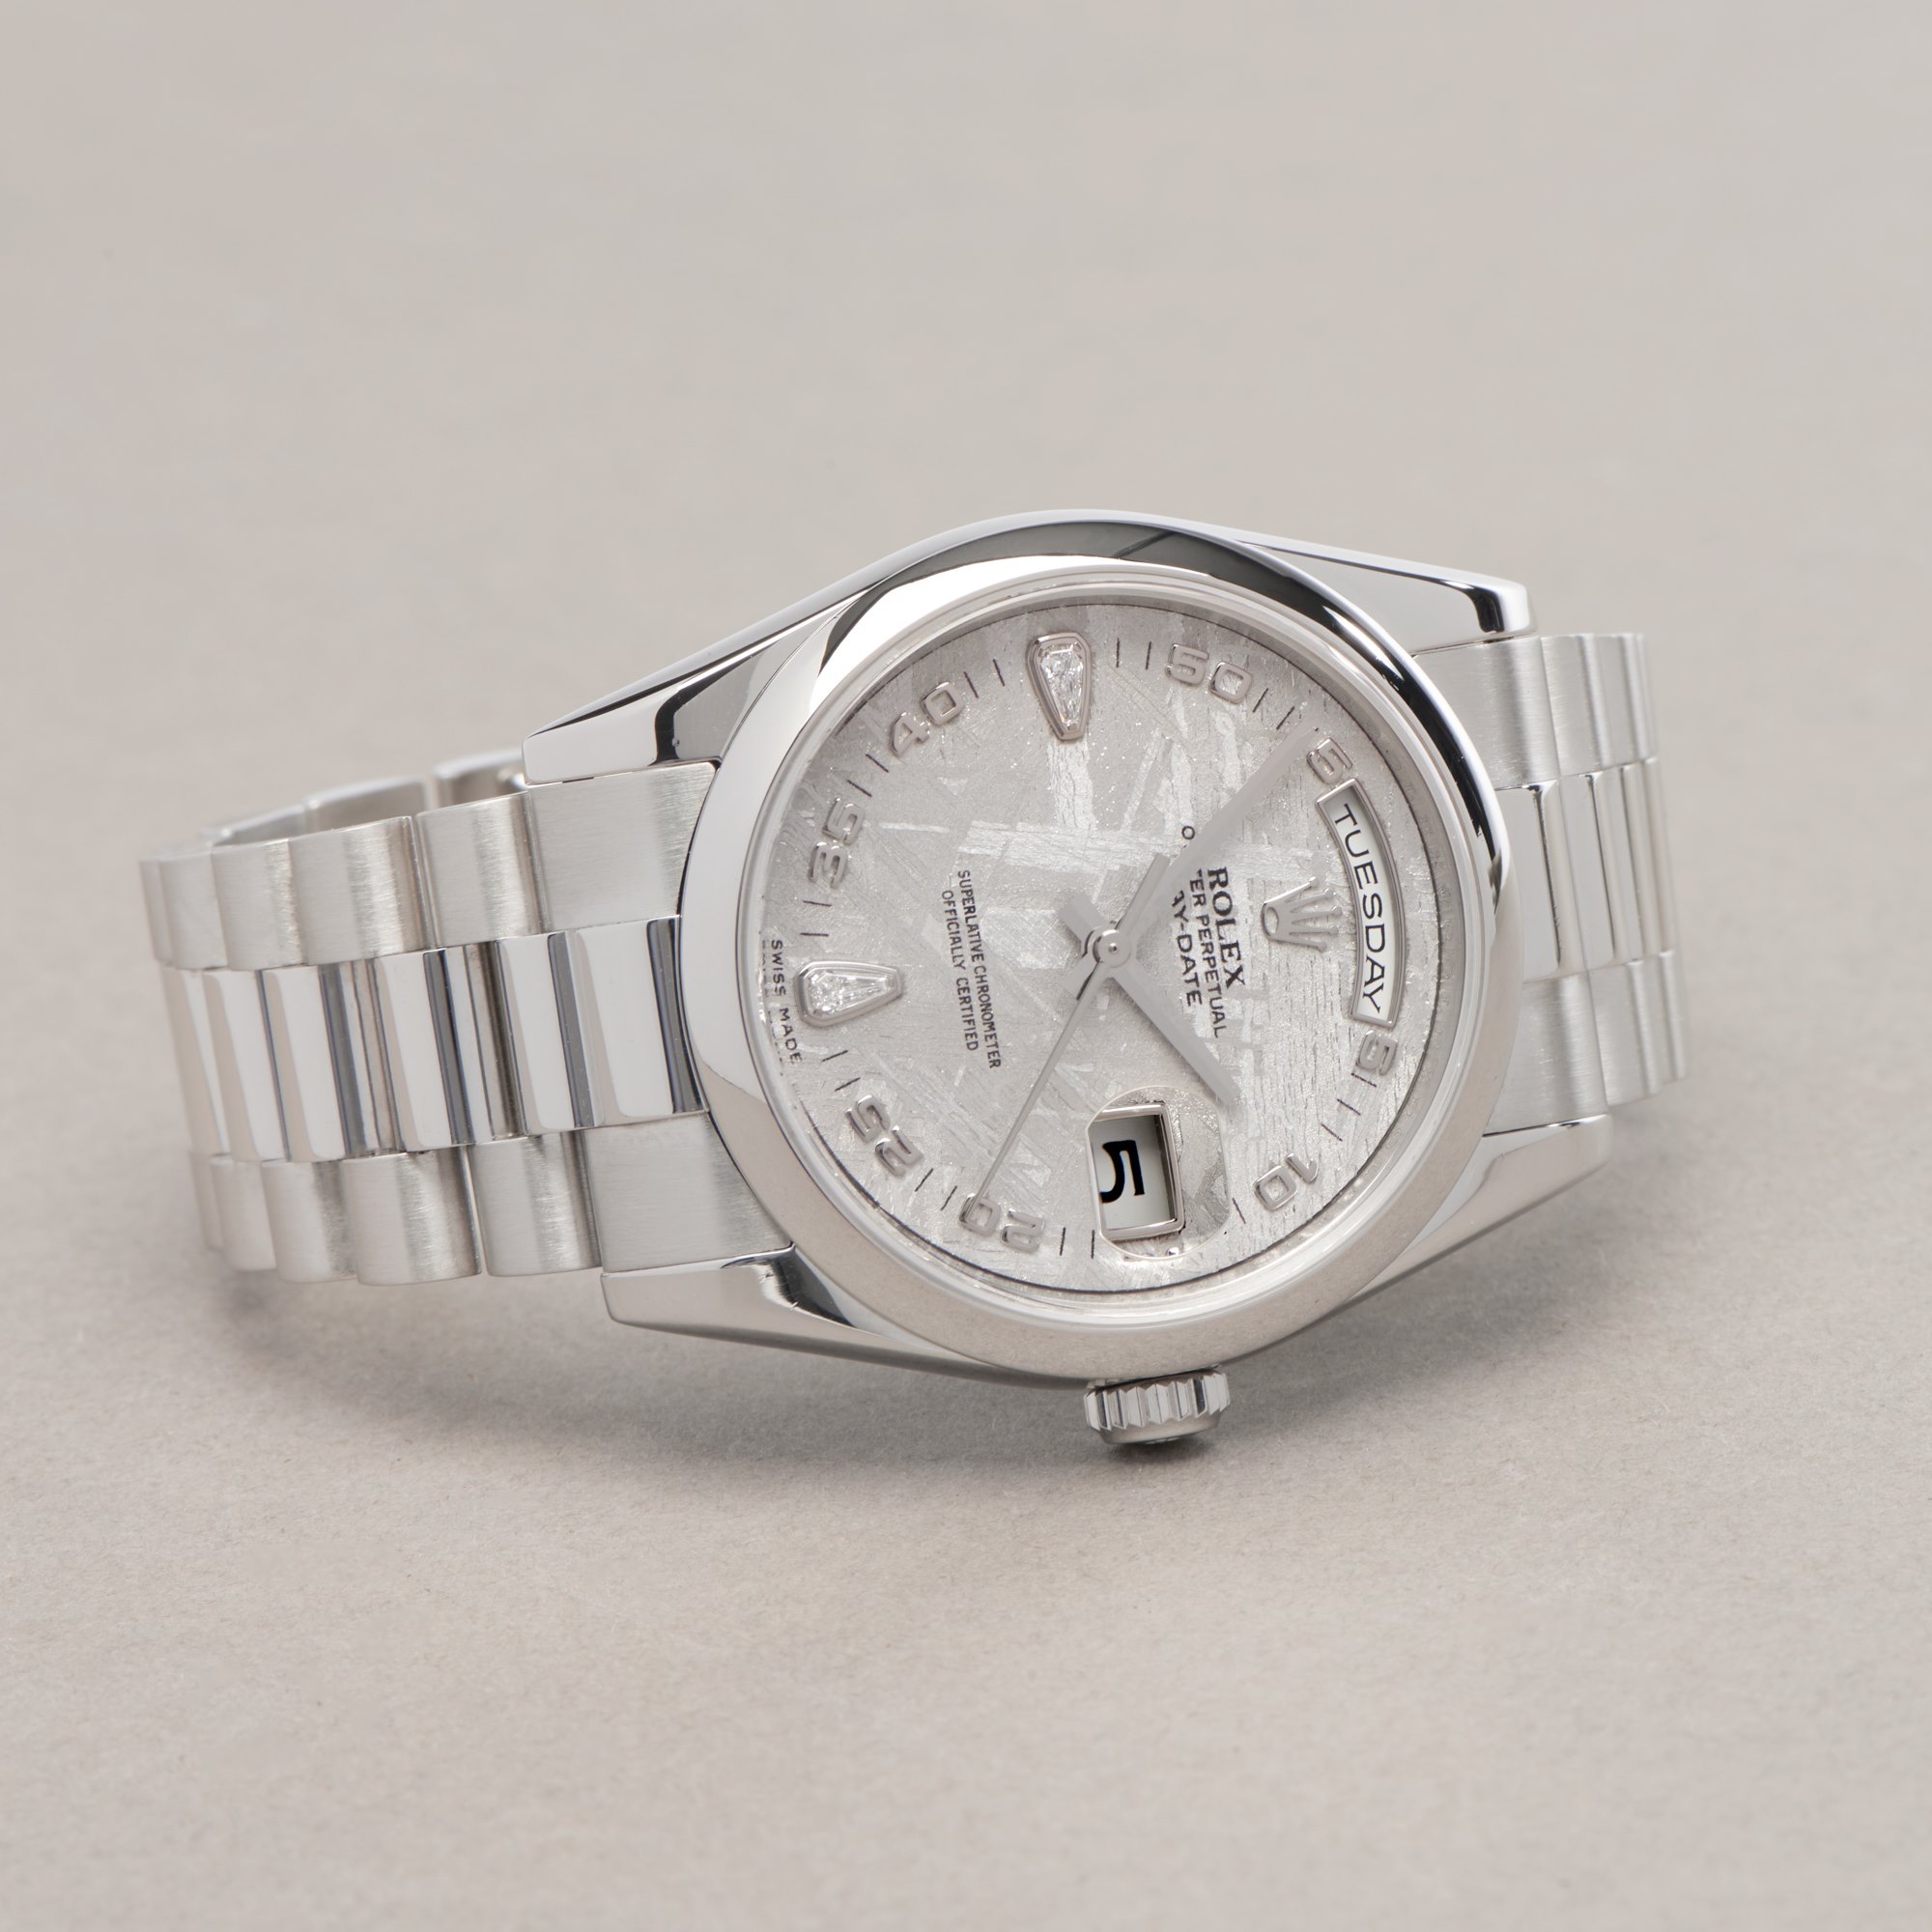 Rolex Day-Date 36 Meteorite Dial Platinum Watch 118206 - Image 5 of 10